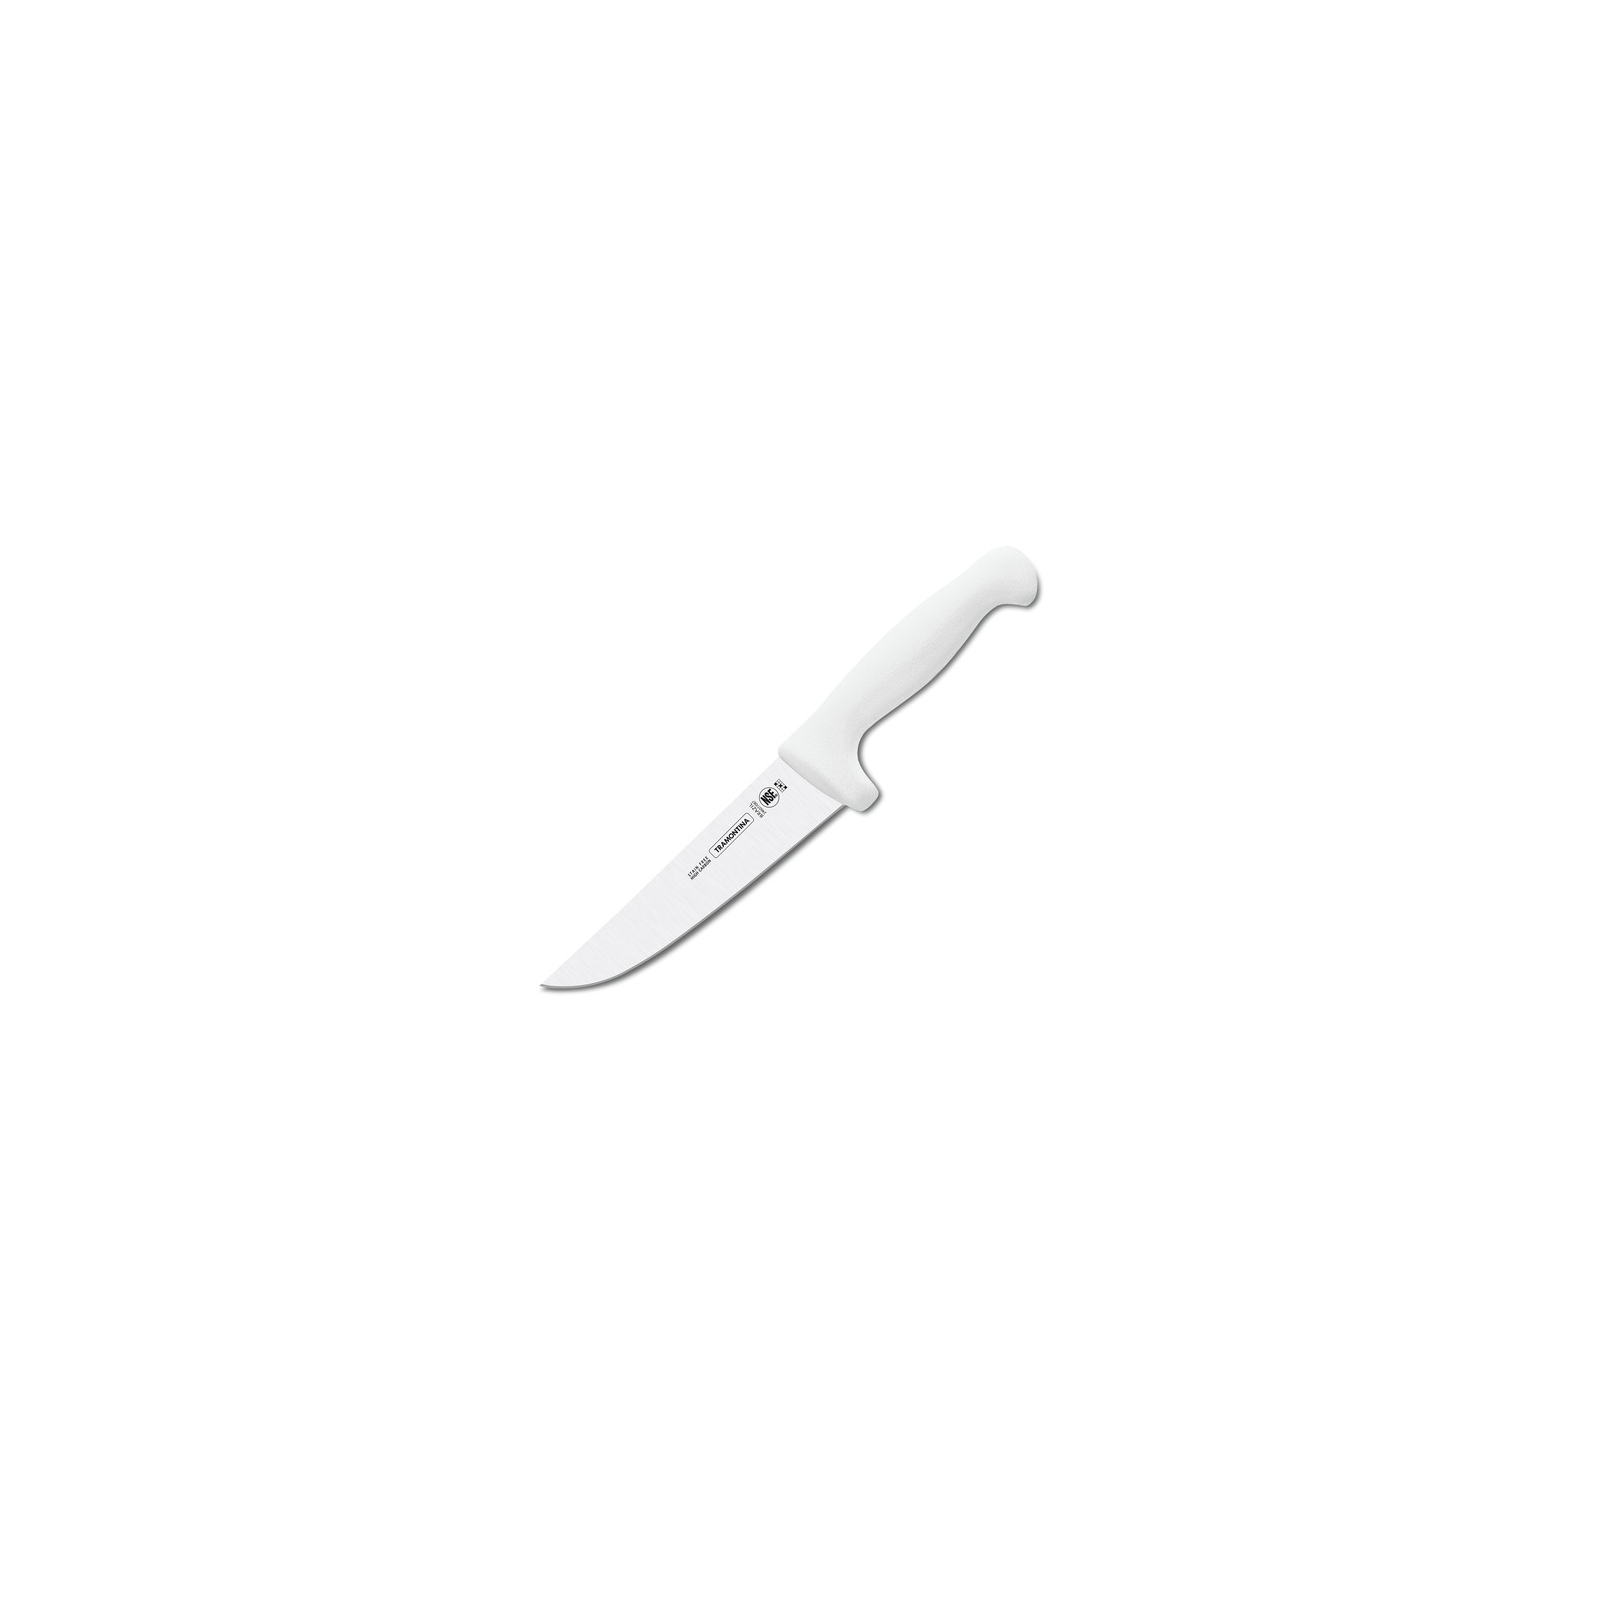 Кухонный нож Tramontina Professional Master для мяса 254 мм White (24607/080)